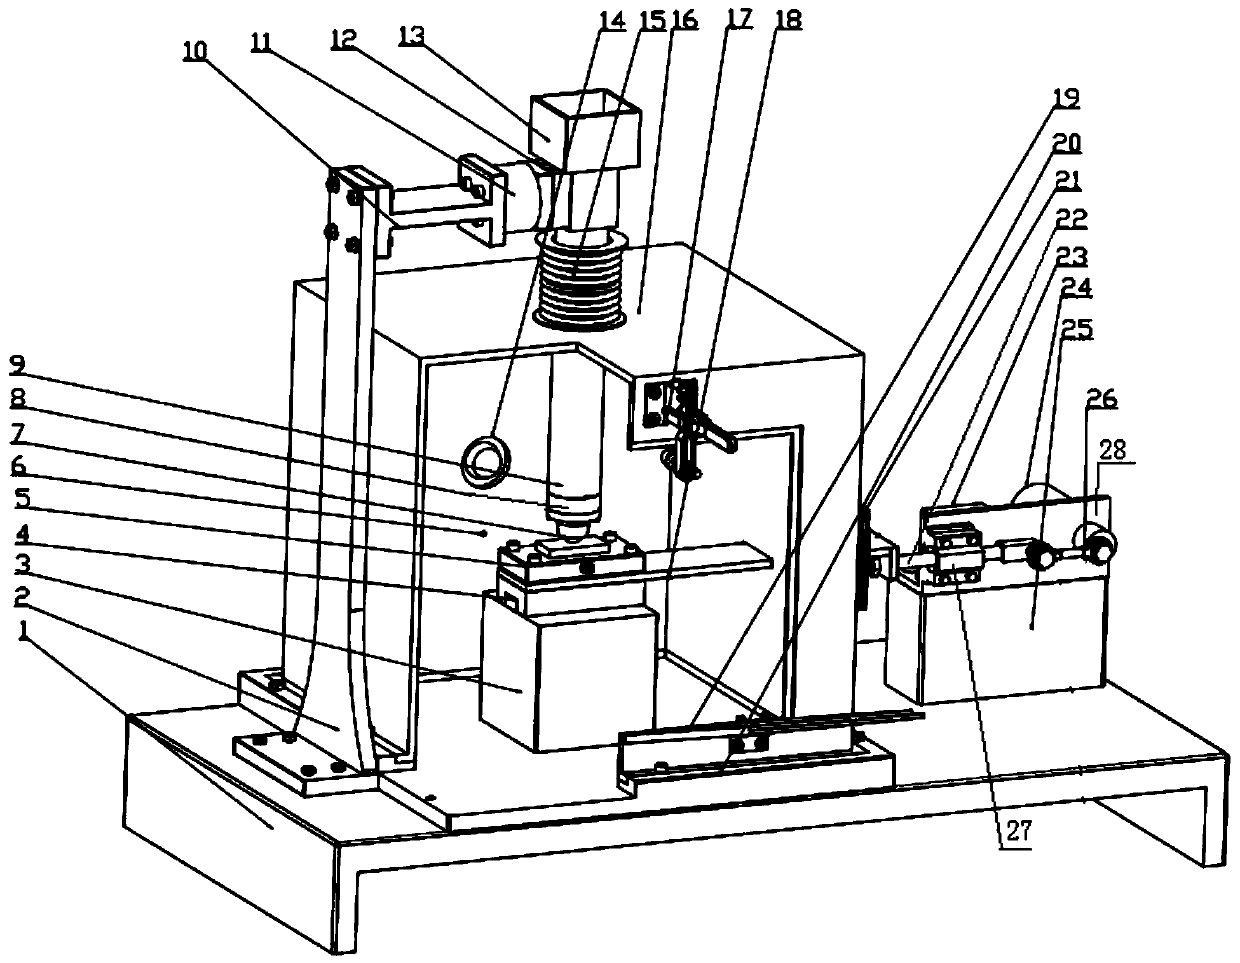 Horizontal movement device for reciprocating corrosion fretting abrasion testing machine